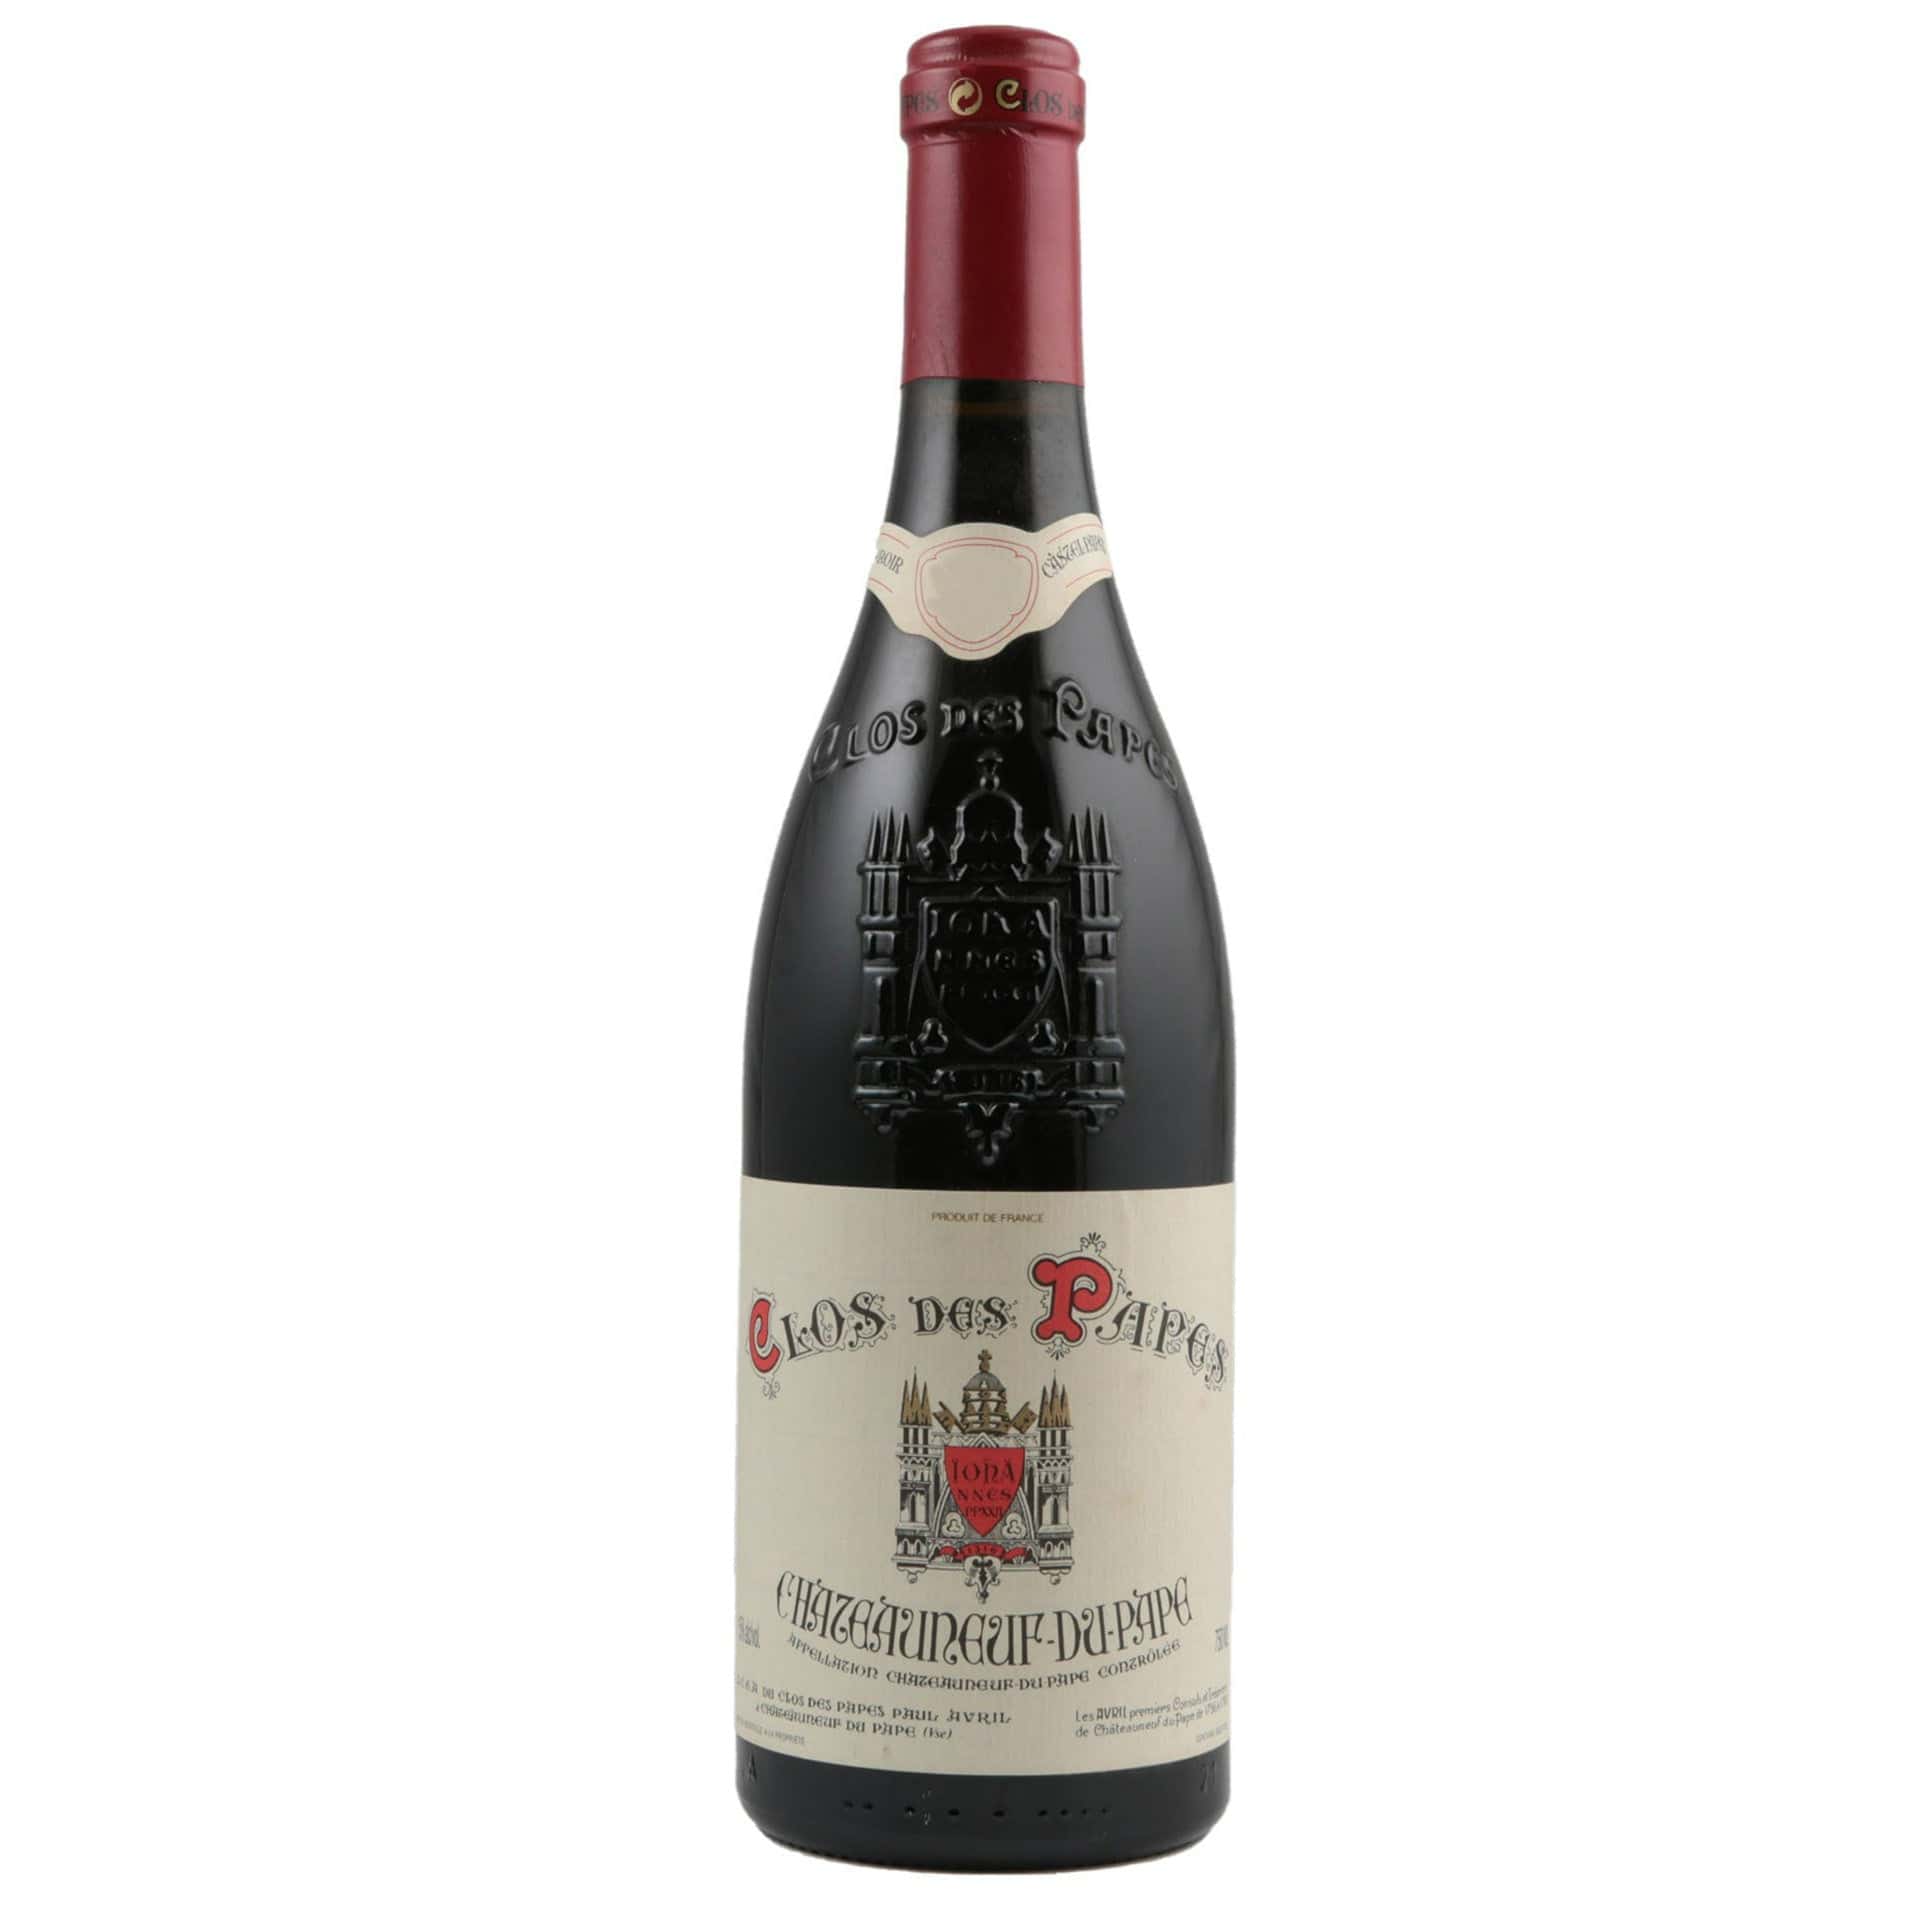 Single bottle of Red wine Paul Avril Clos des Papes, CDP, Chateauneuf du Pape, 2005 65% Grenache, 20% Mourvèdre, 10% Syrah & 5% Vaccarèse